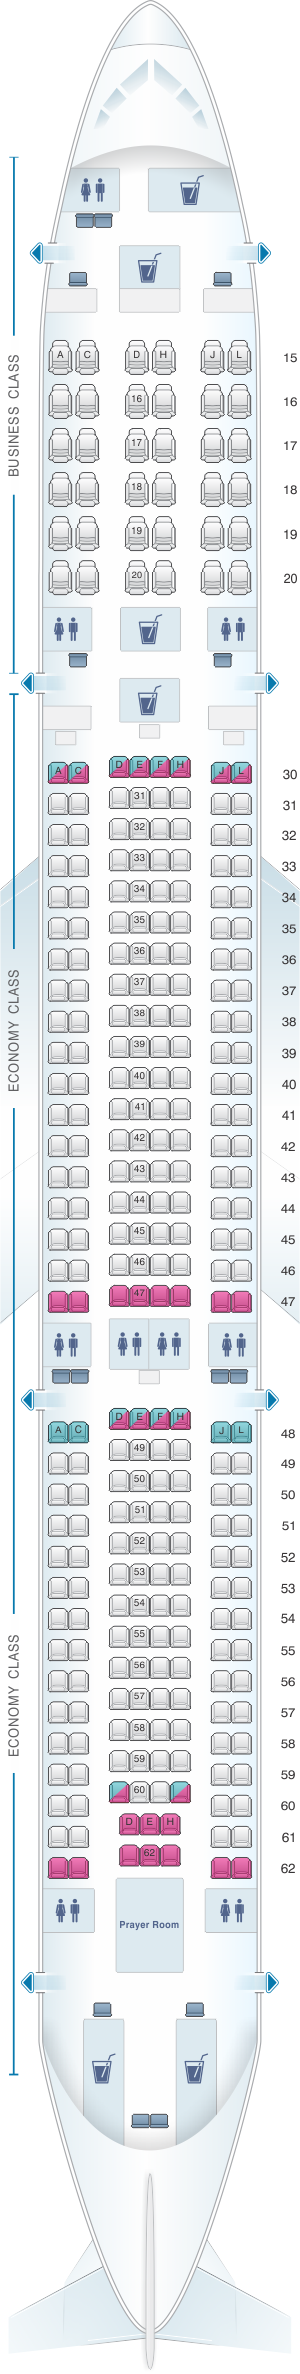 Seat map for Saudi Arabian Airlines Airbus A330 300 (333)